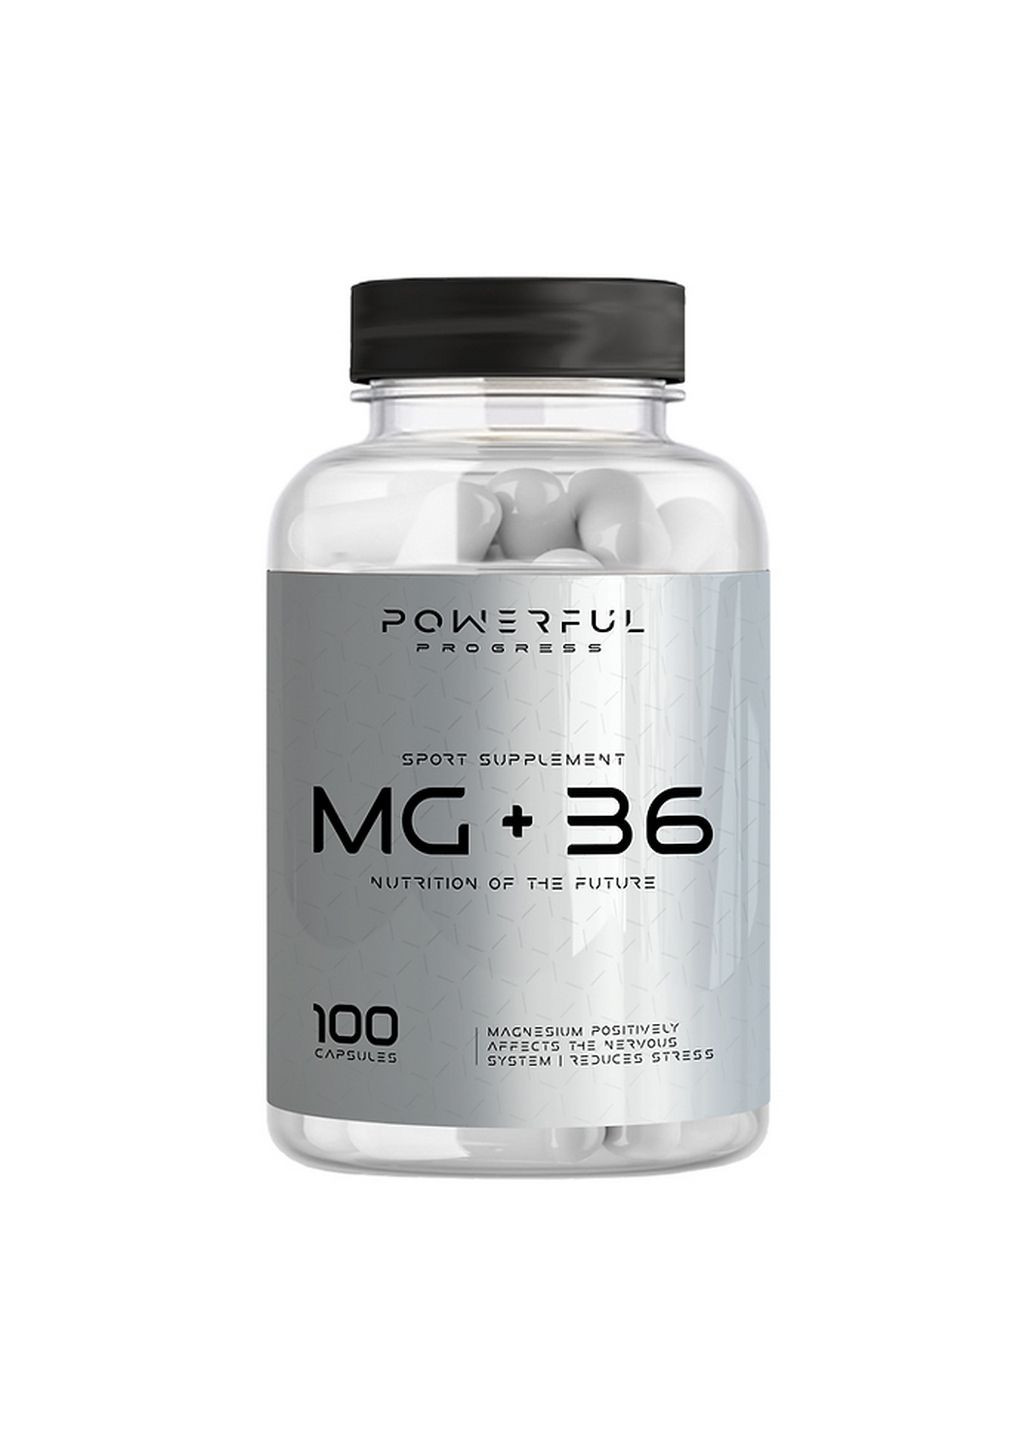 Витамины и минералы Mg+B6, 100 капсул Powerful Progress (293342770)